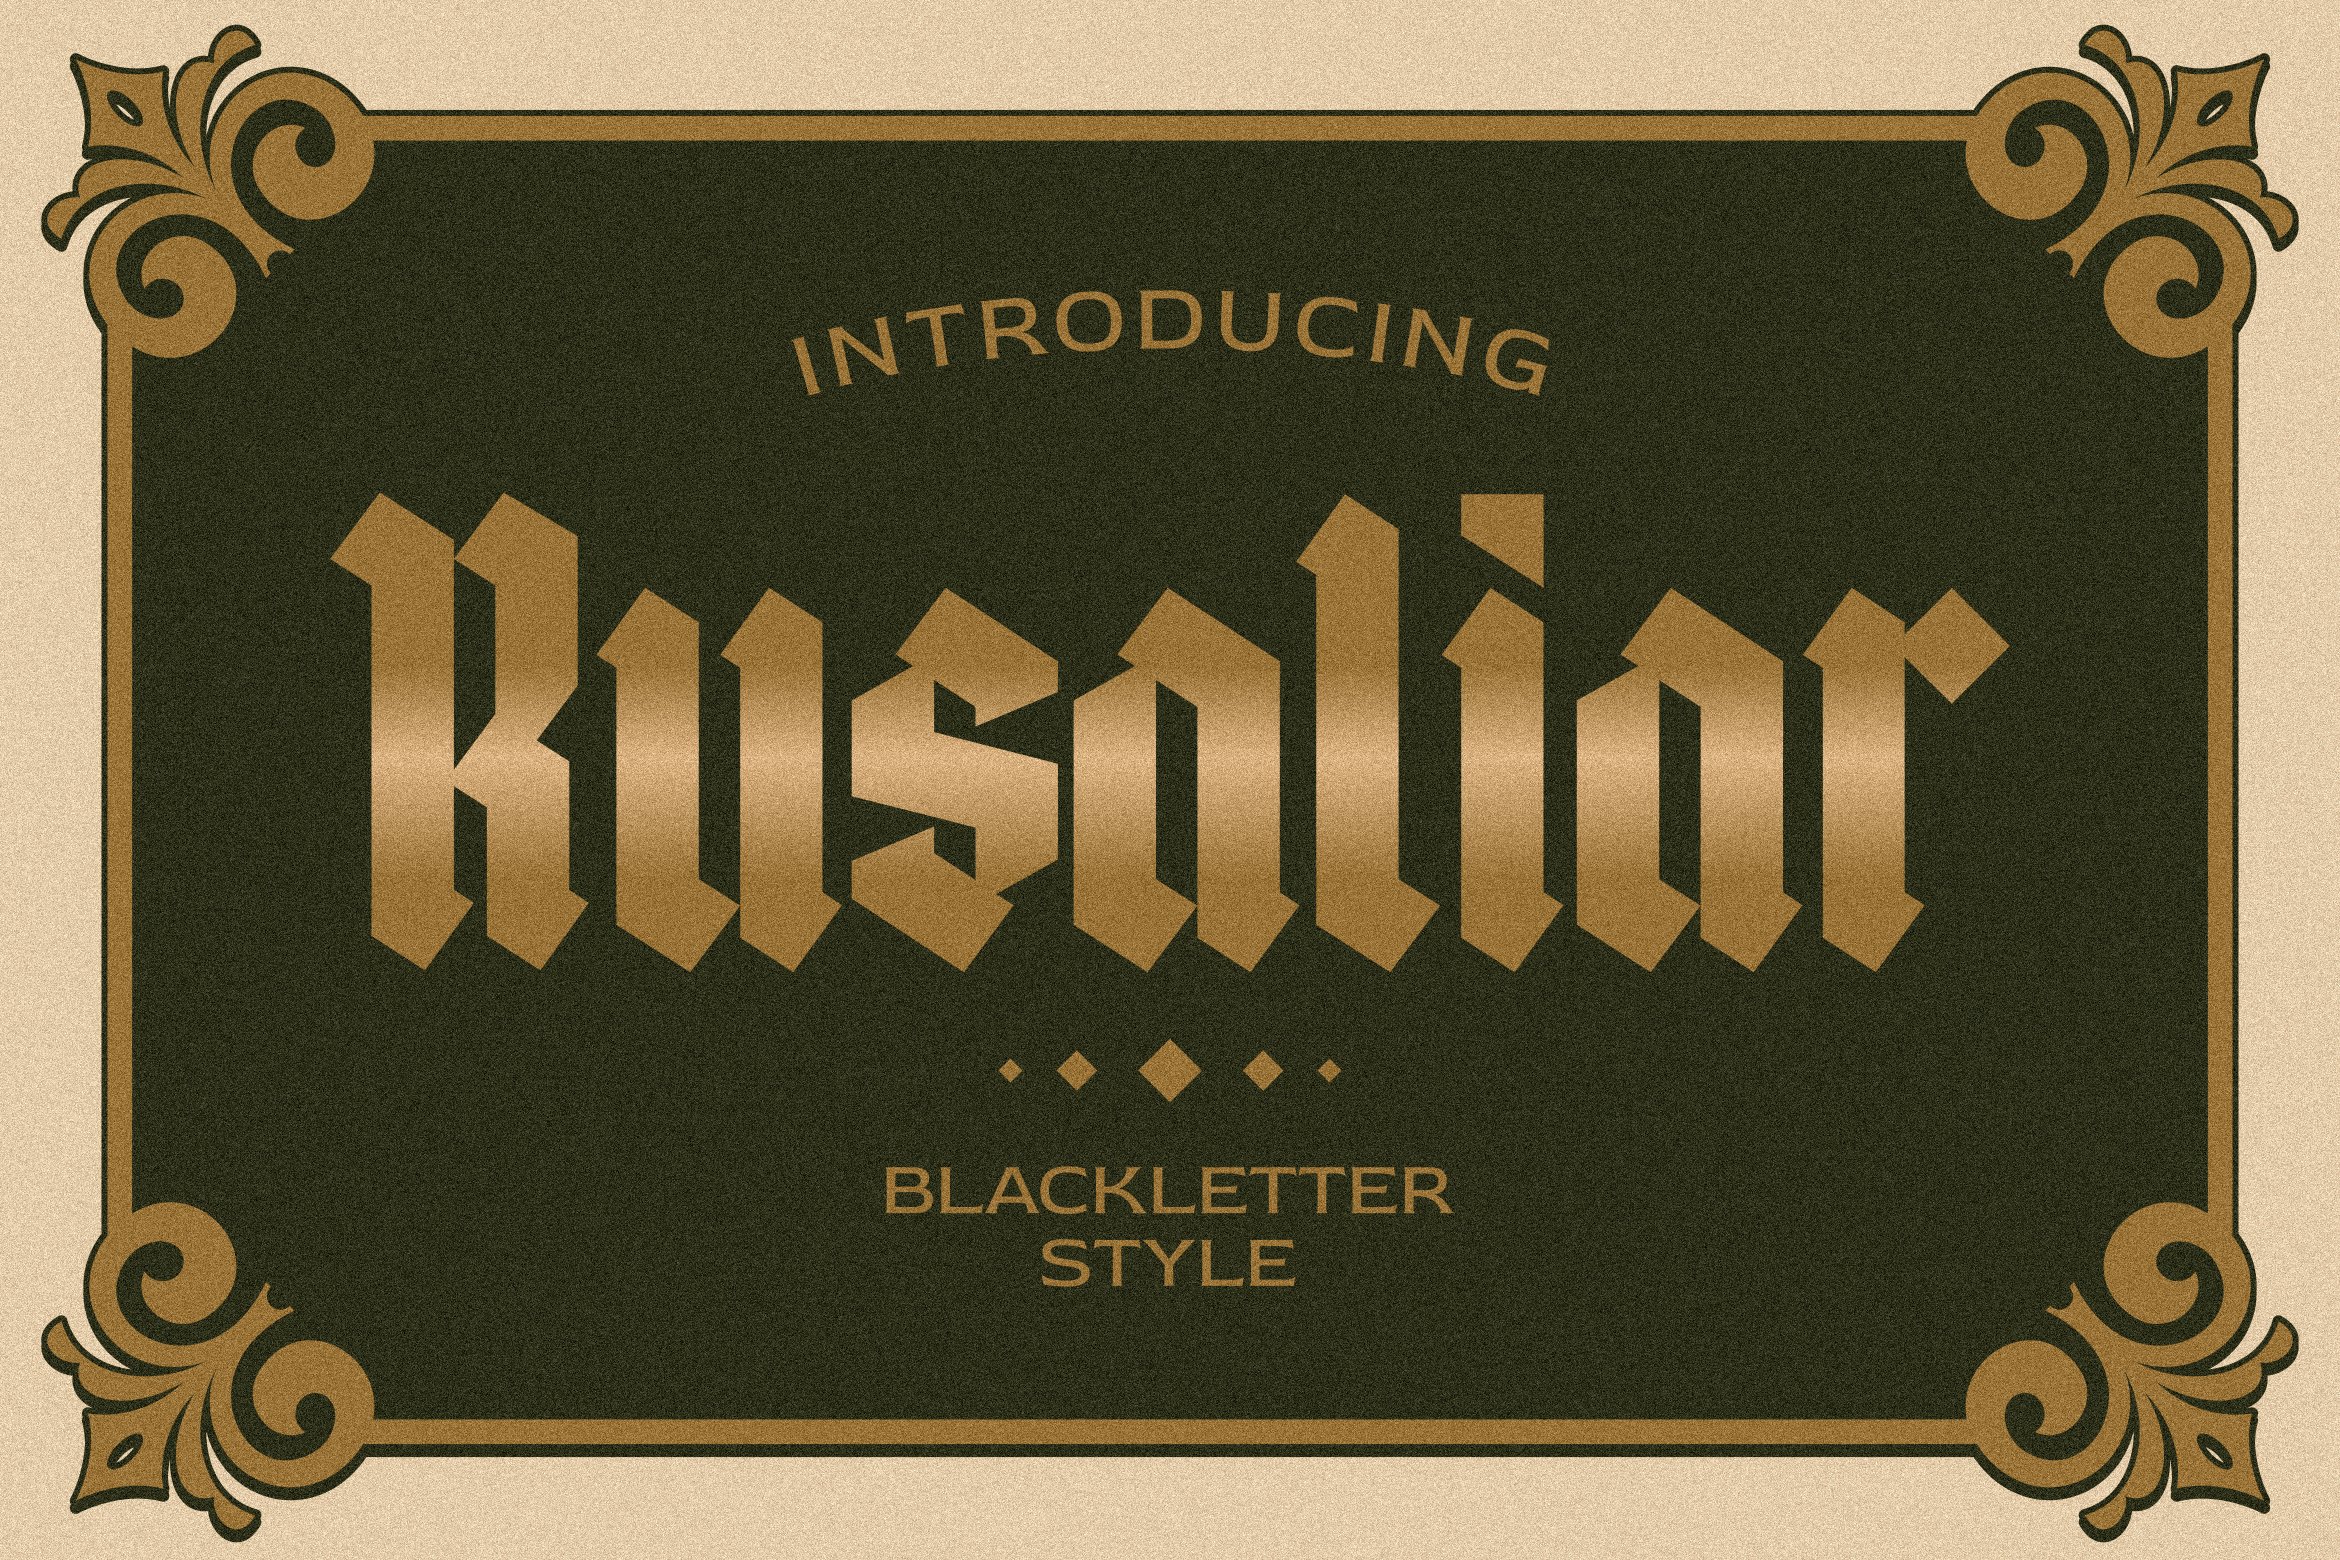 Rusaliar Blackletter cover image.